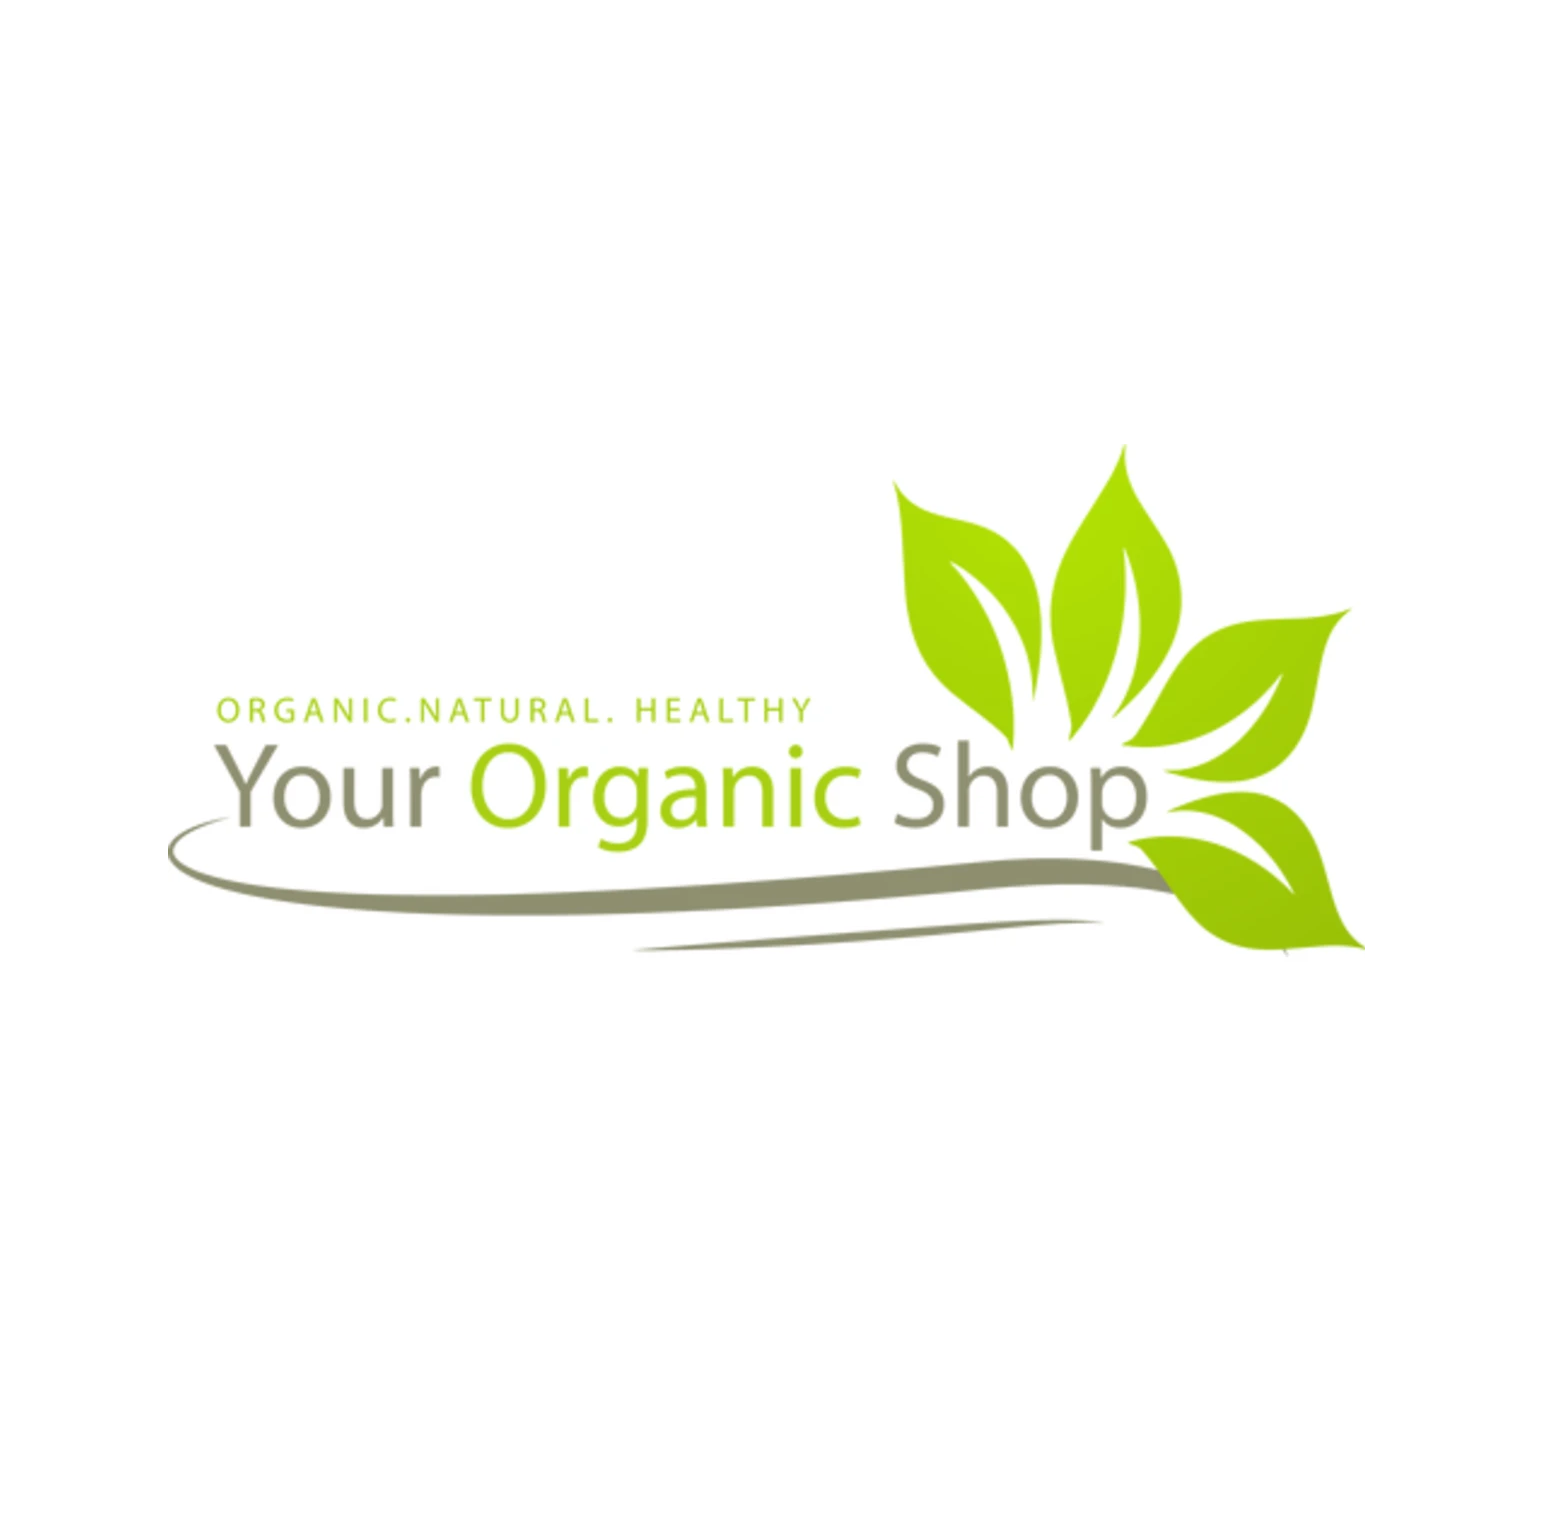 Your Organic Shop